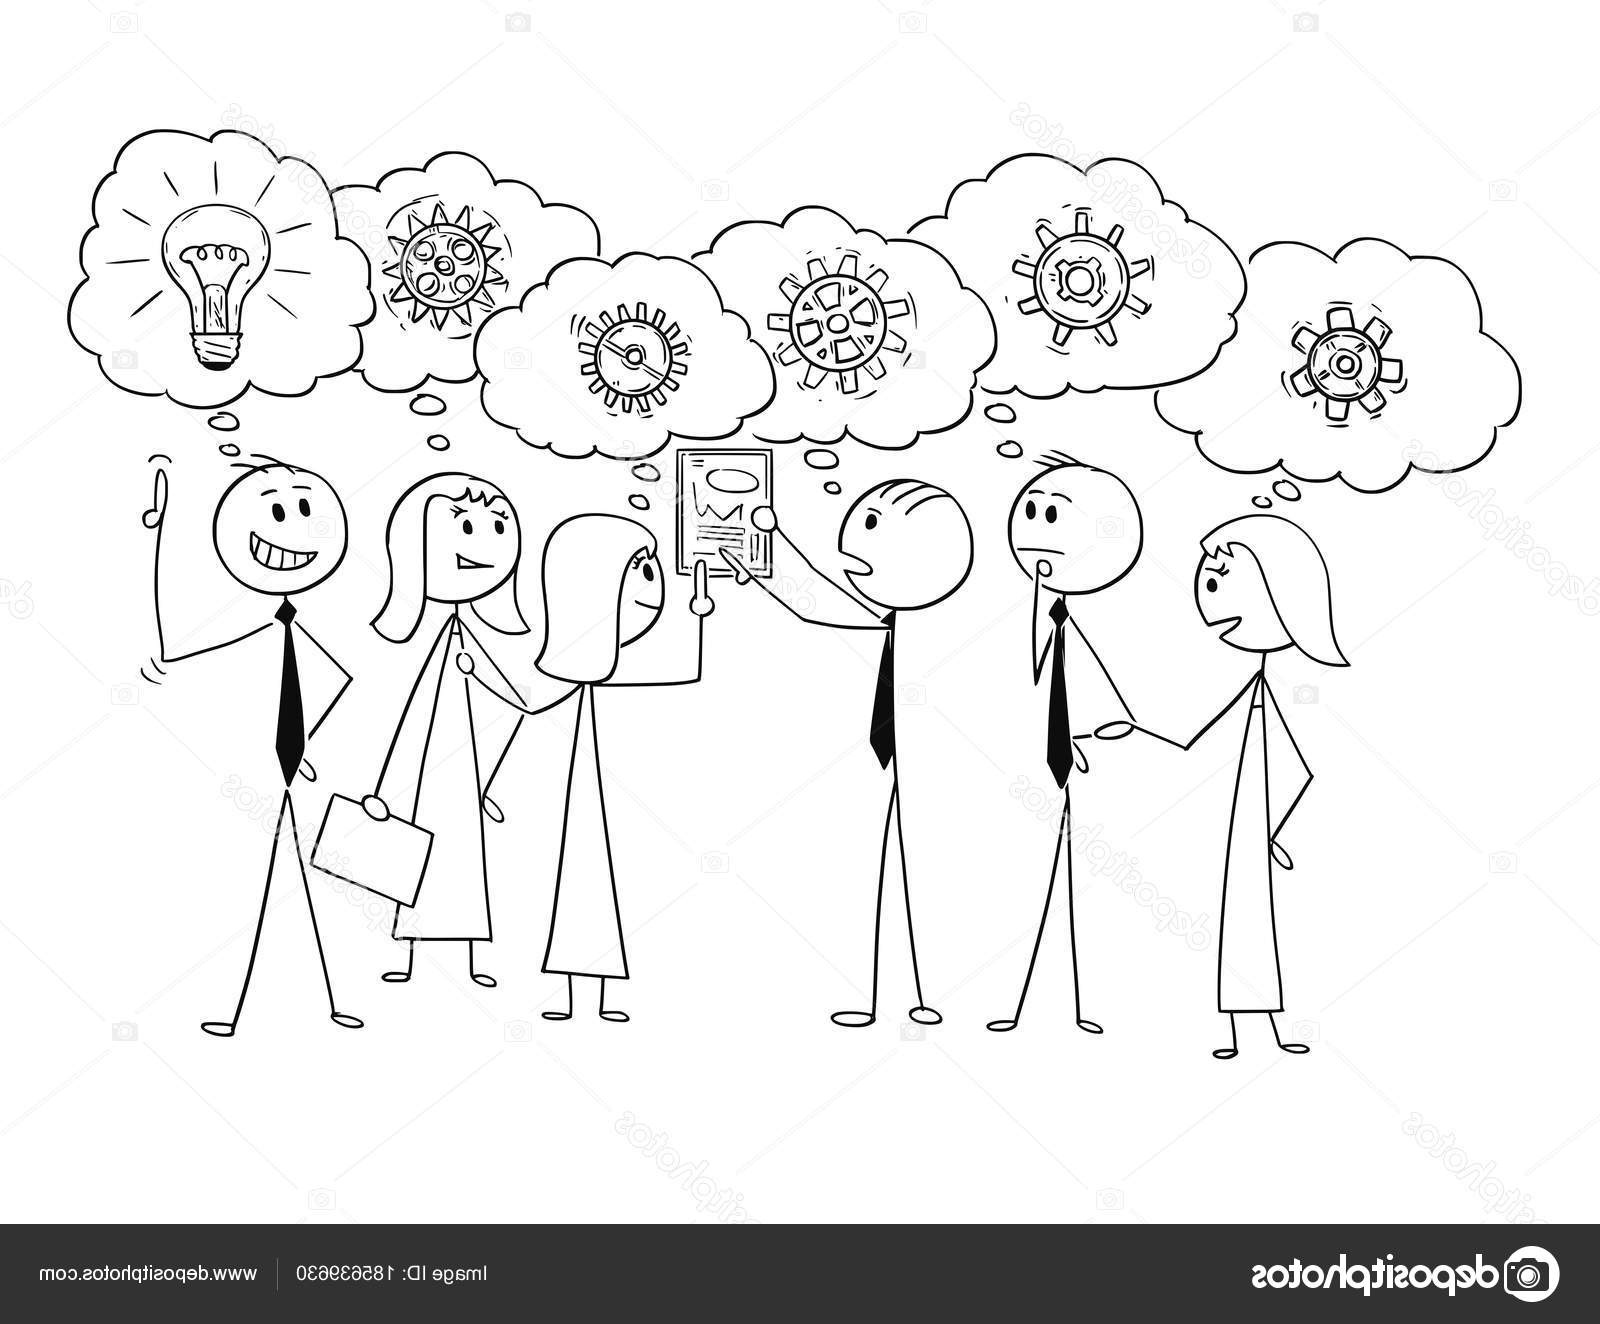 stock illustration cartoon of business team working